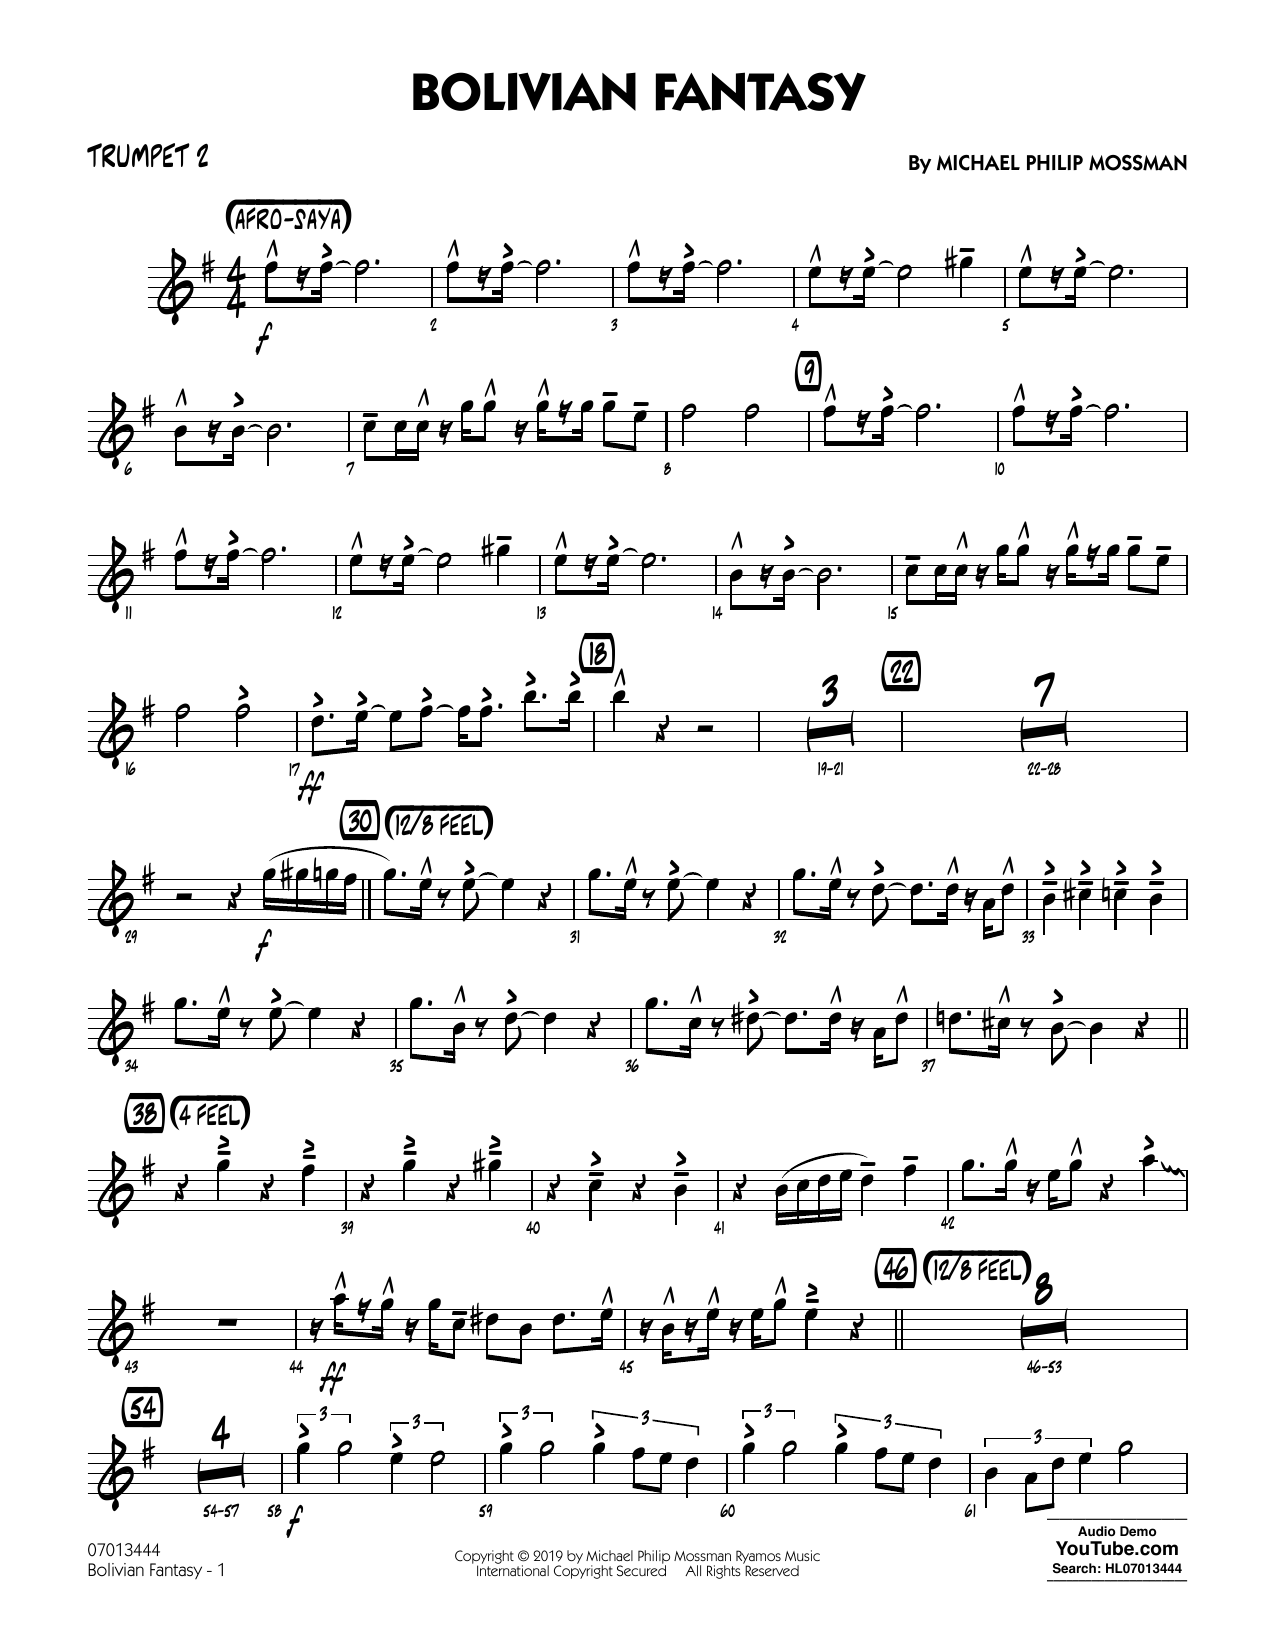 Michael Philip Mossman Bolivian Fantasy - Trumpet 2 Sheet Music Notes & Chords for Jazz Ensemble - Download or Print PDF